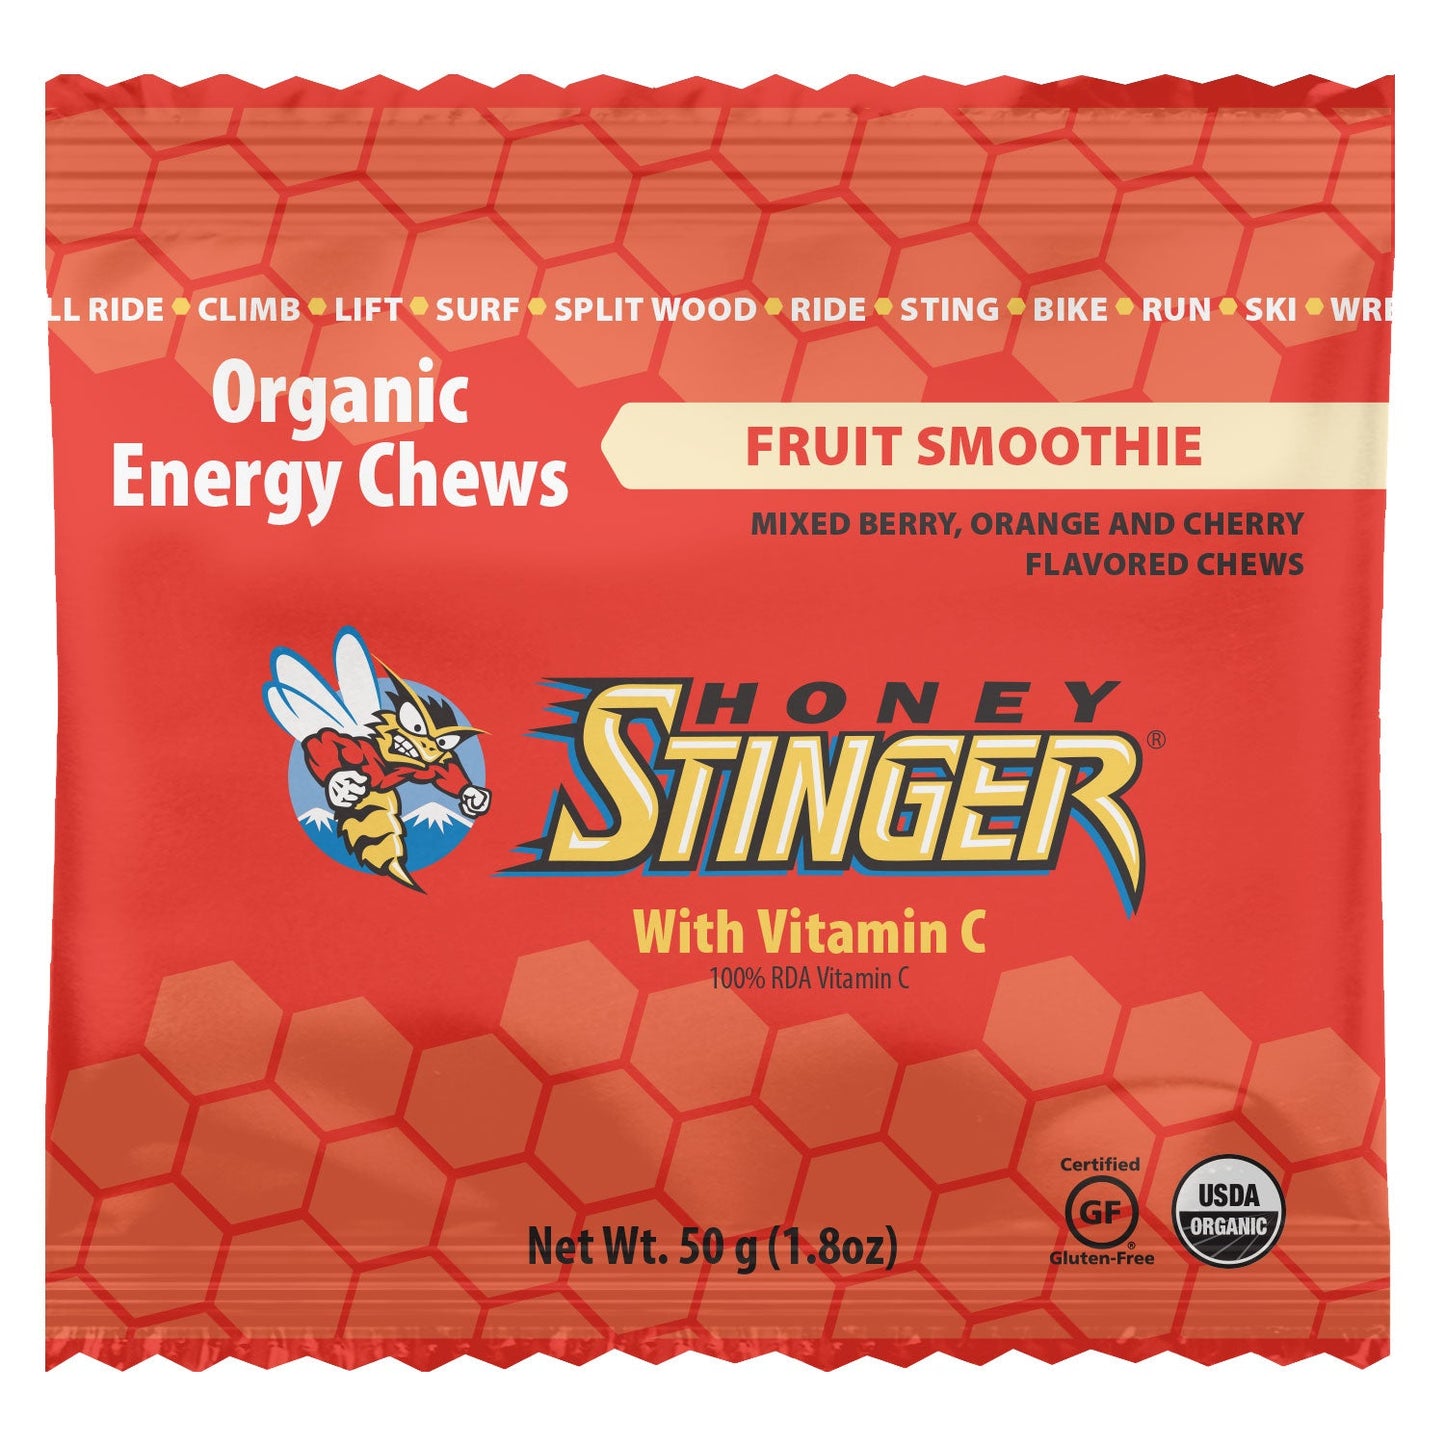 Energy Chews - Fruit Smoothie